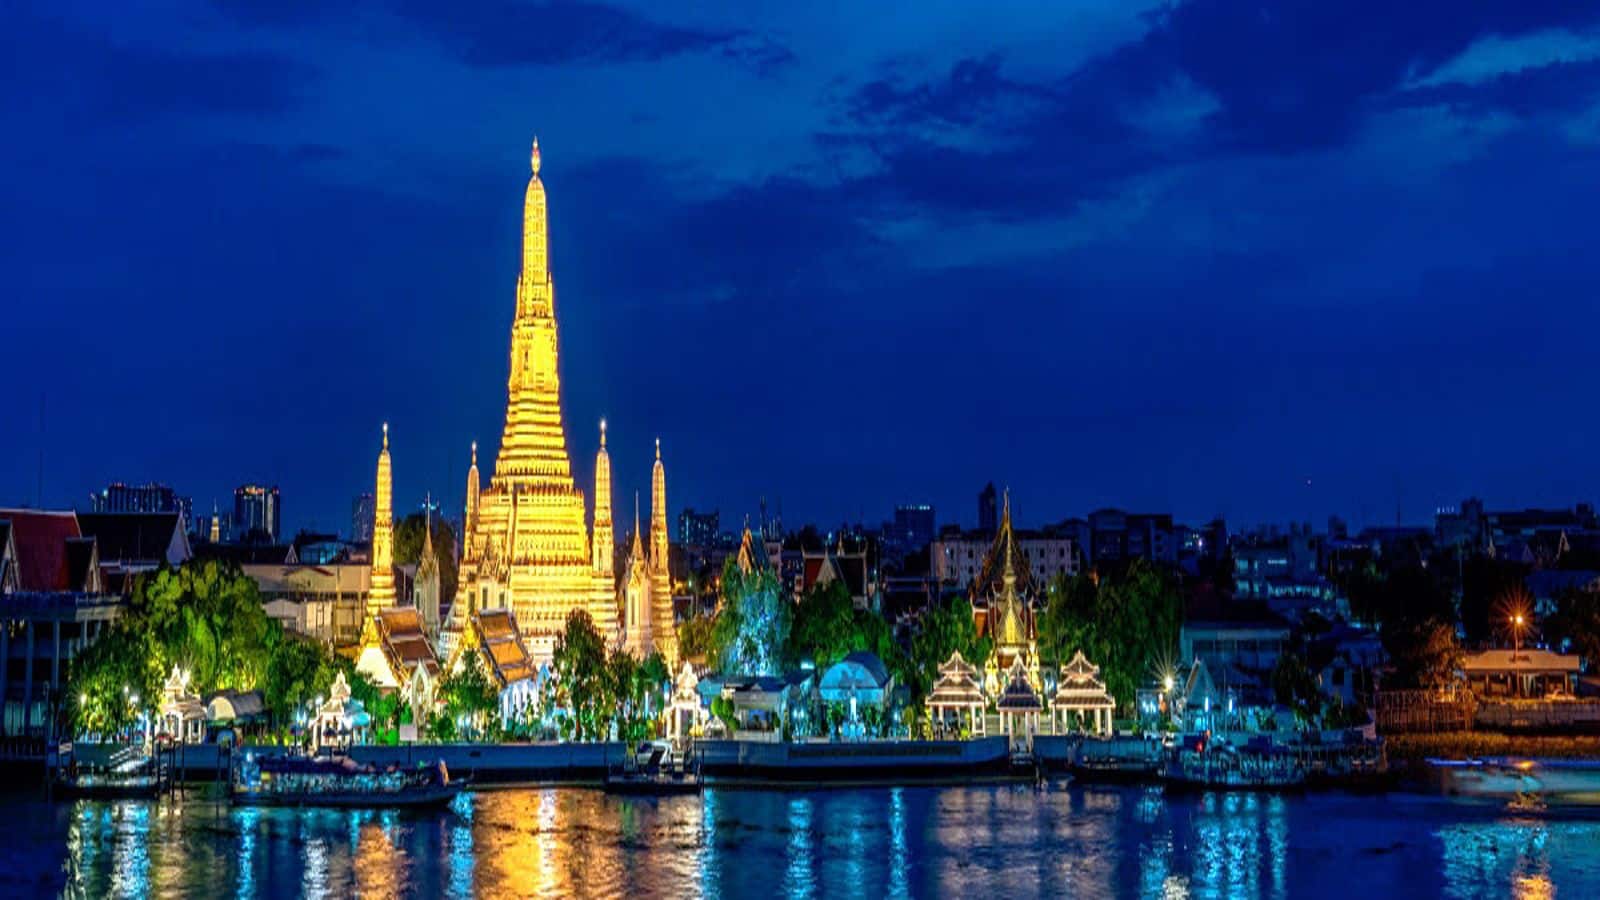 Bangkok beyond brochures: Key recommendations for better trip planning